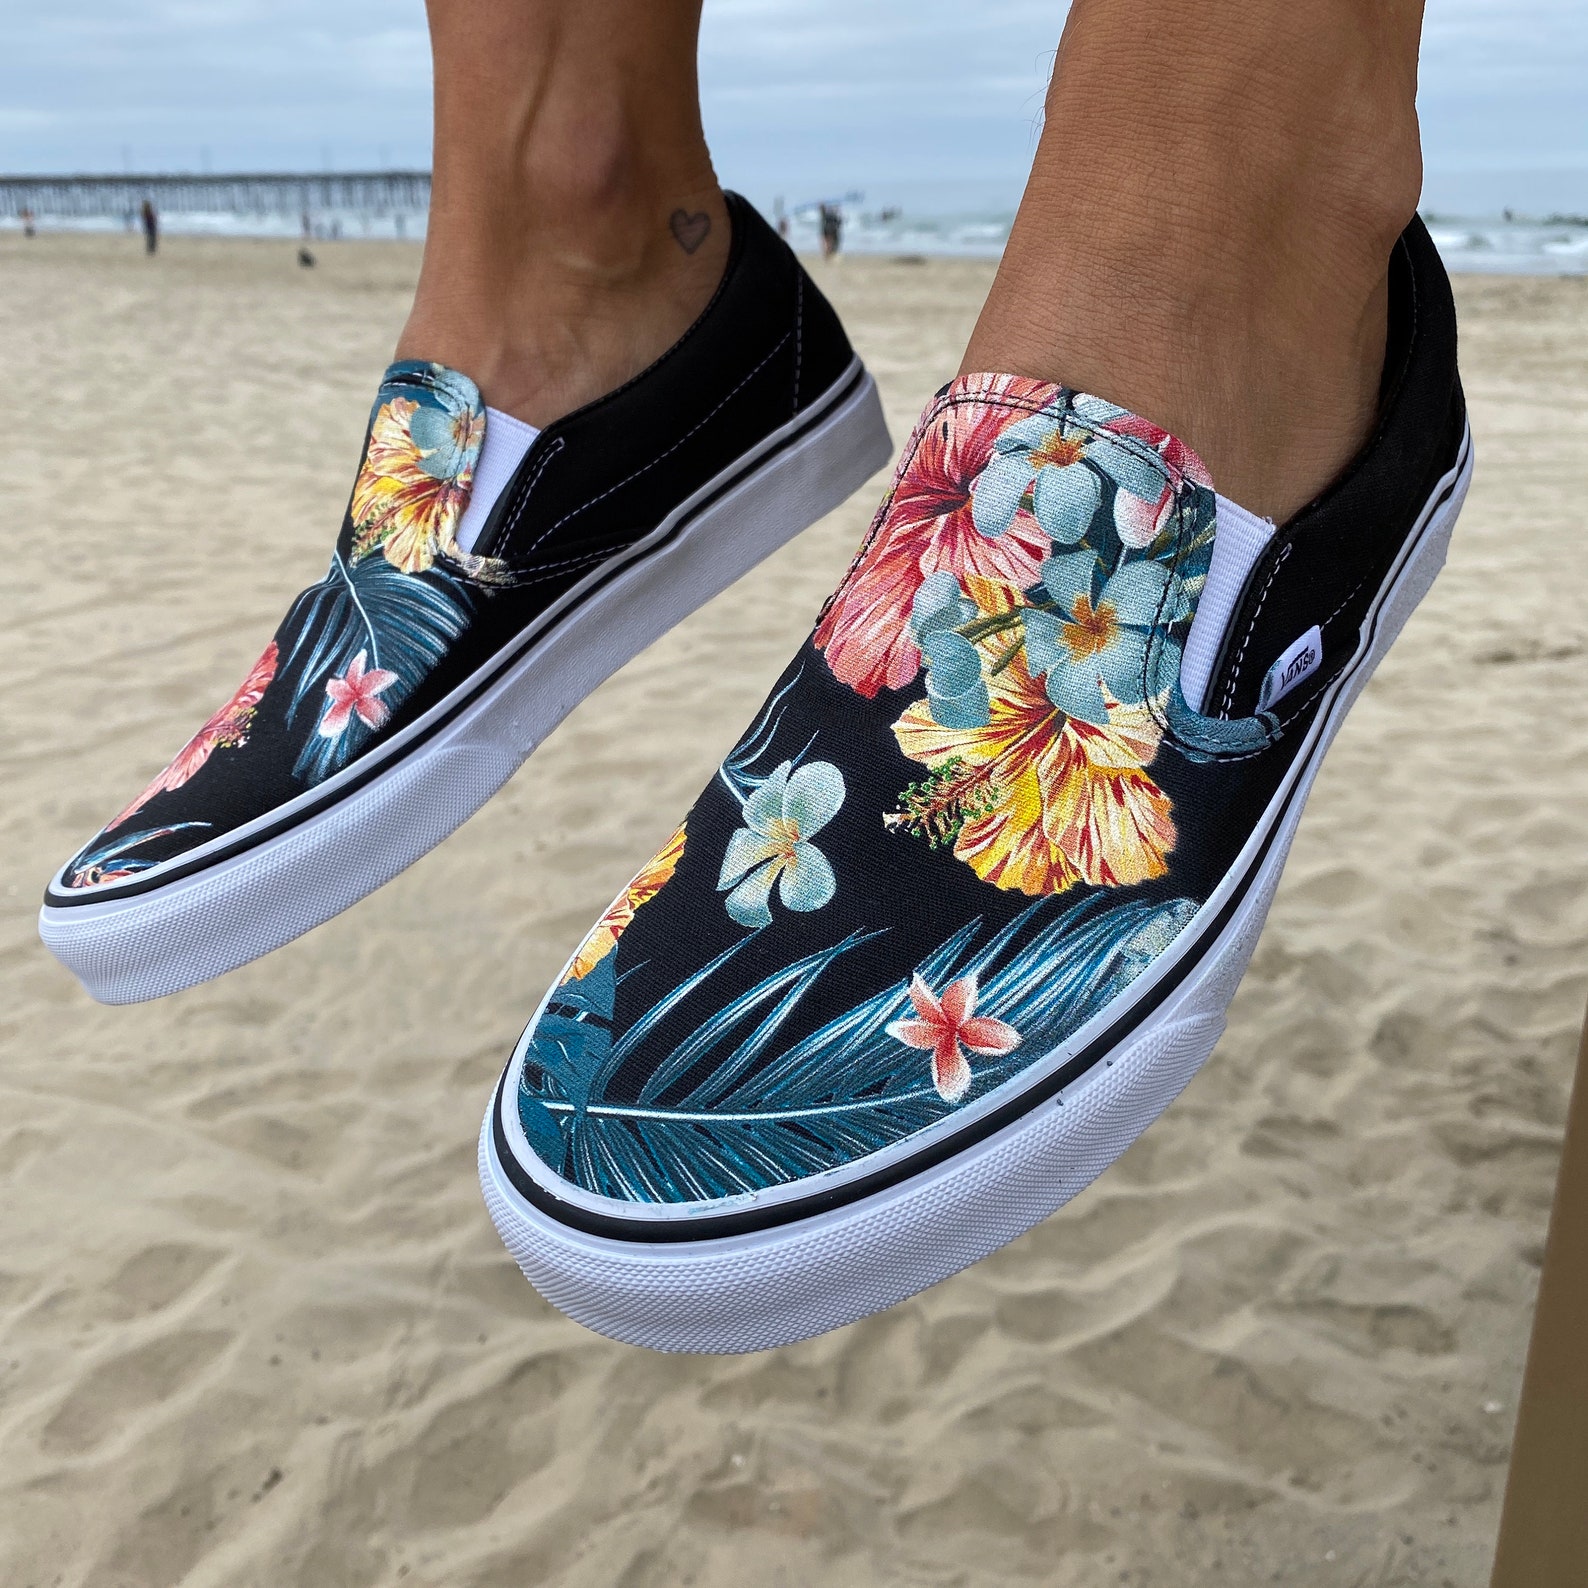 Tropical Floral Pattern on Black Vans Slip On Shoes | Etsy